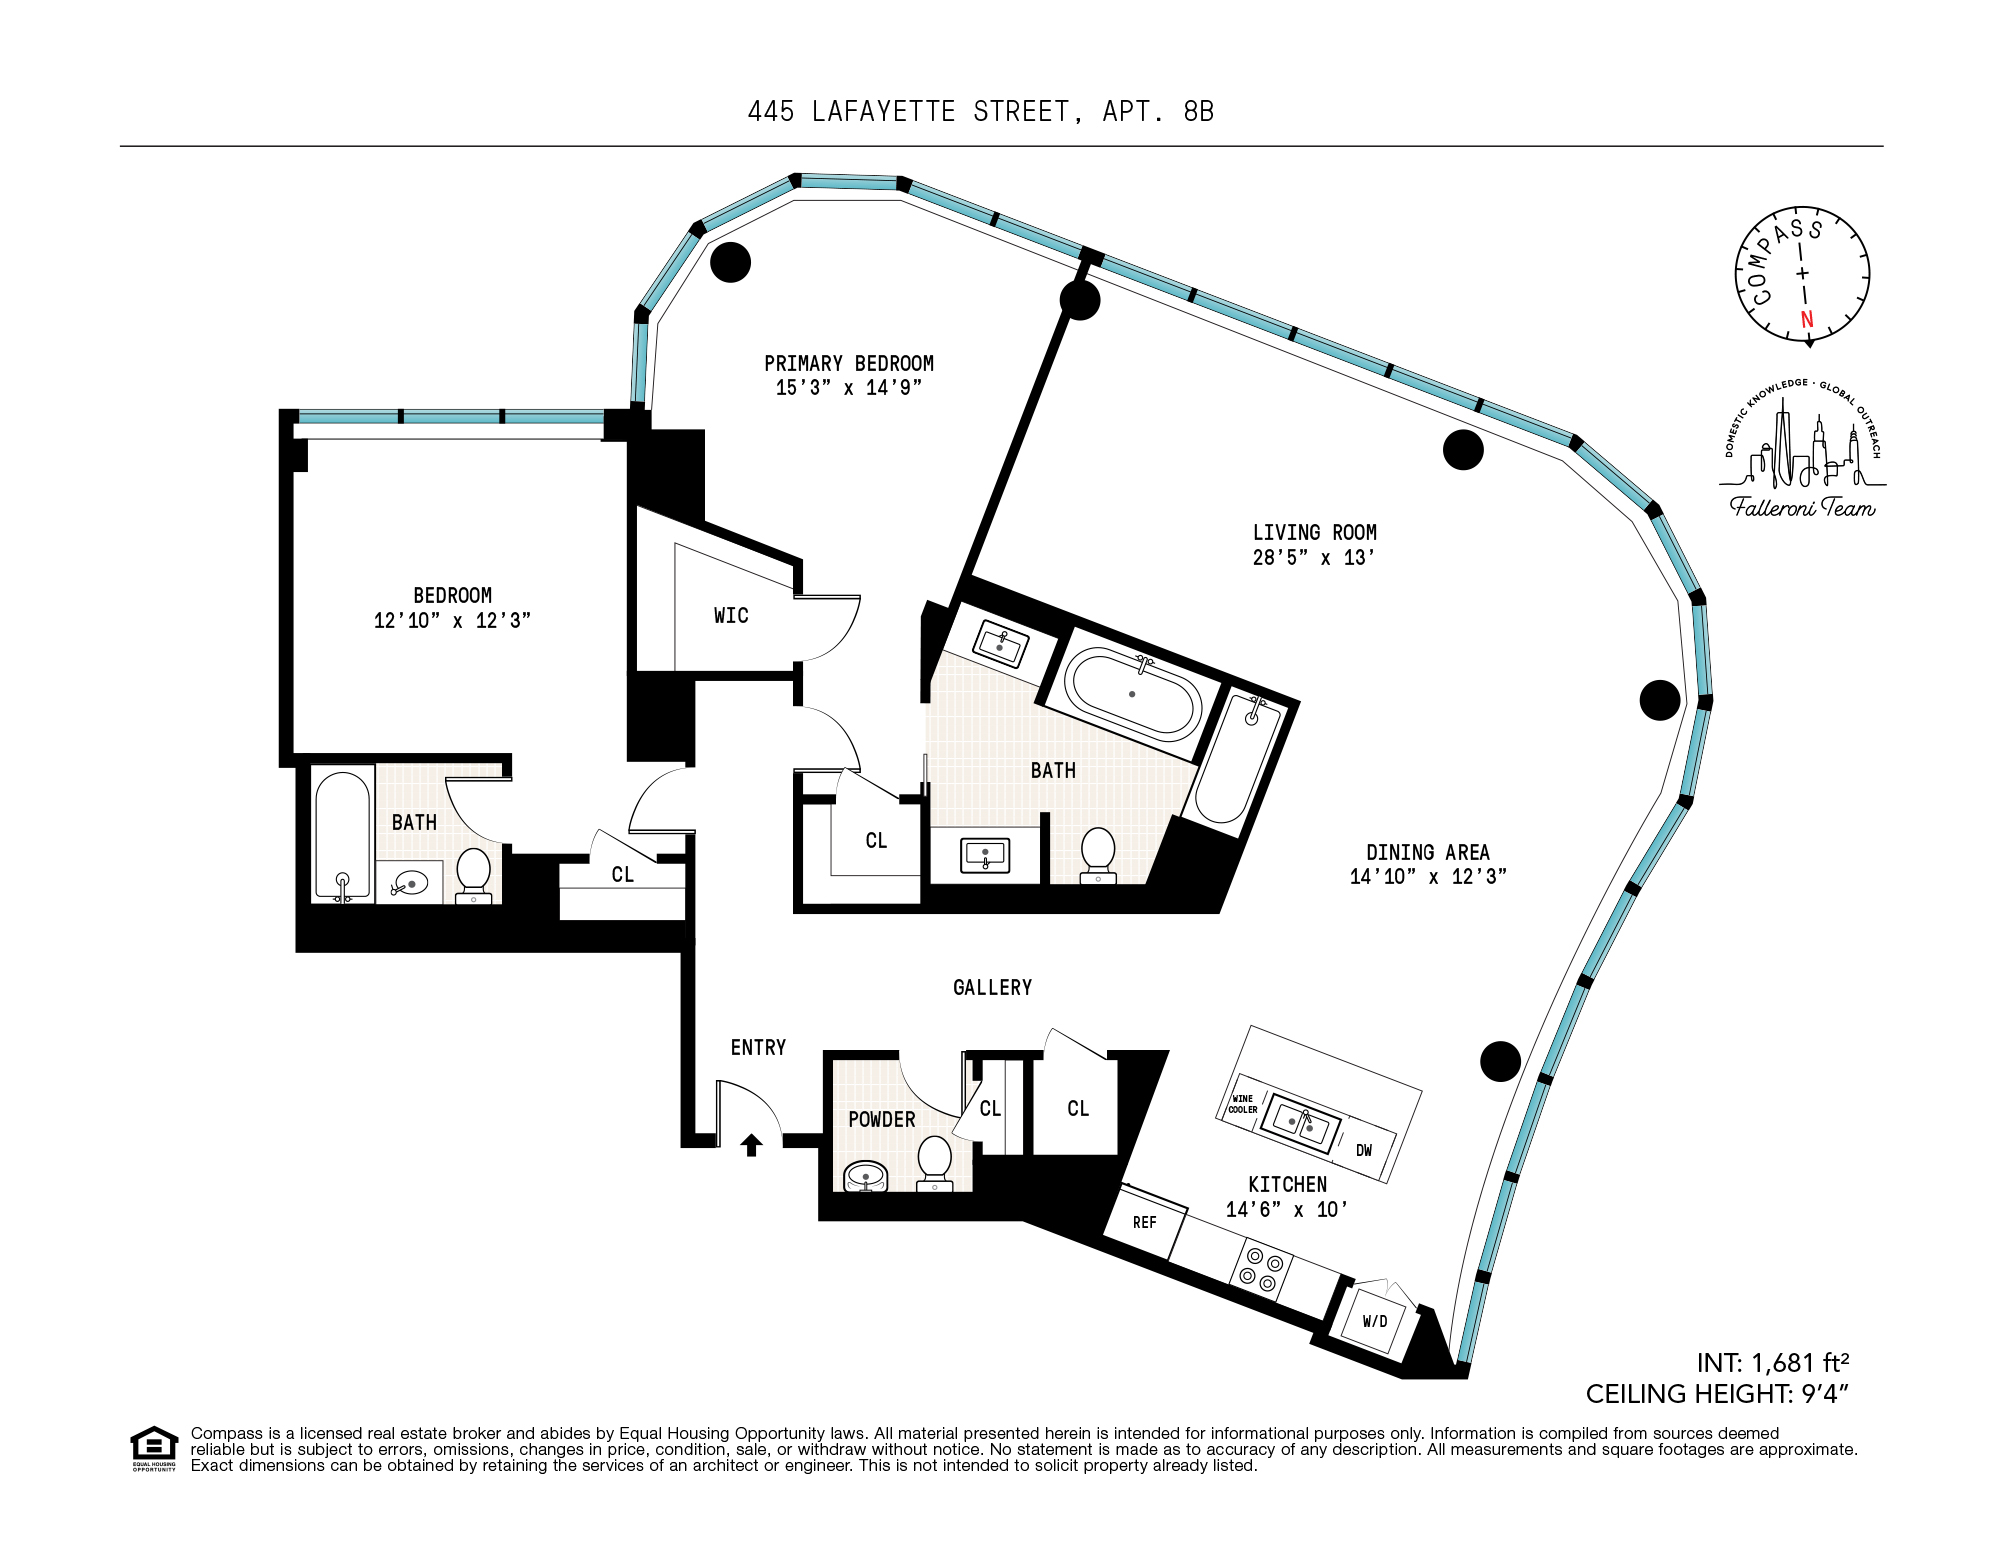 Floorplan for 445 Lafayette Street, 8B